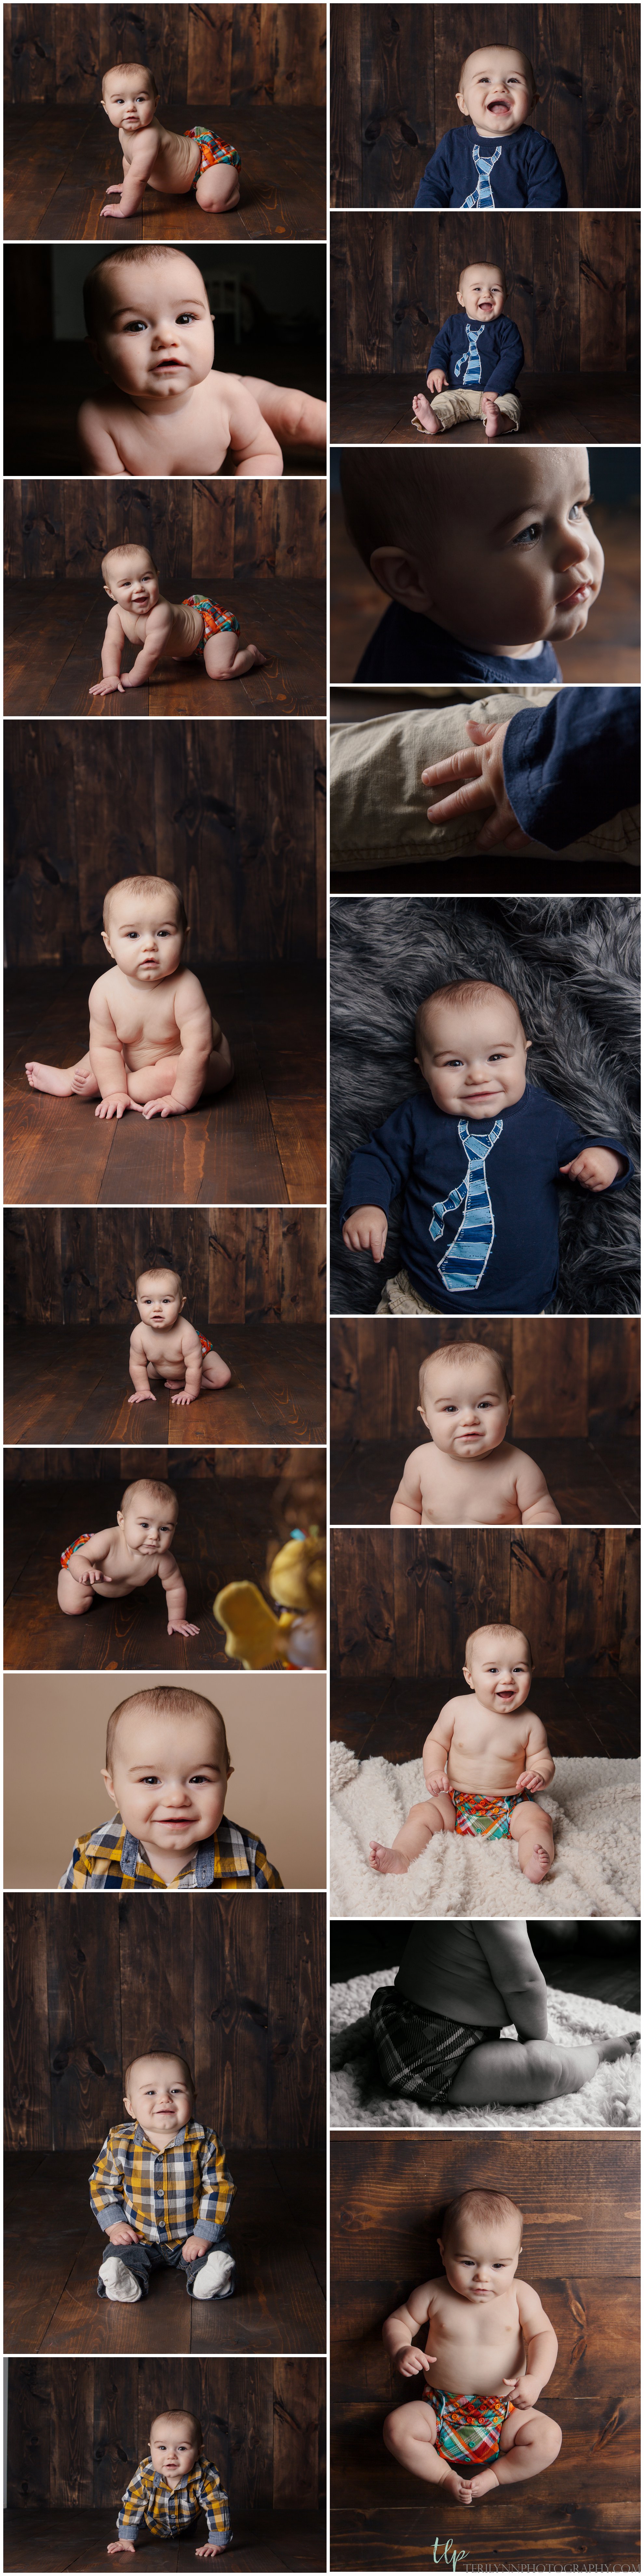 Baby milestone photography session